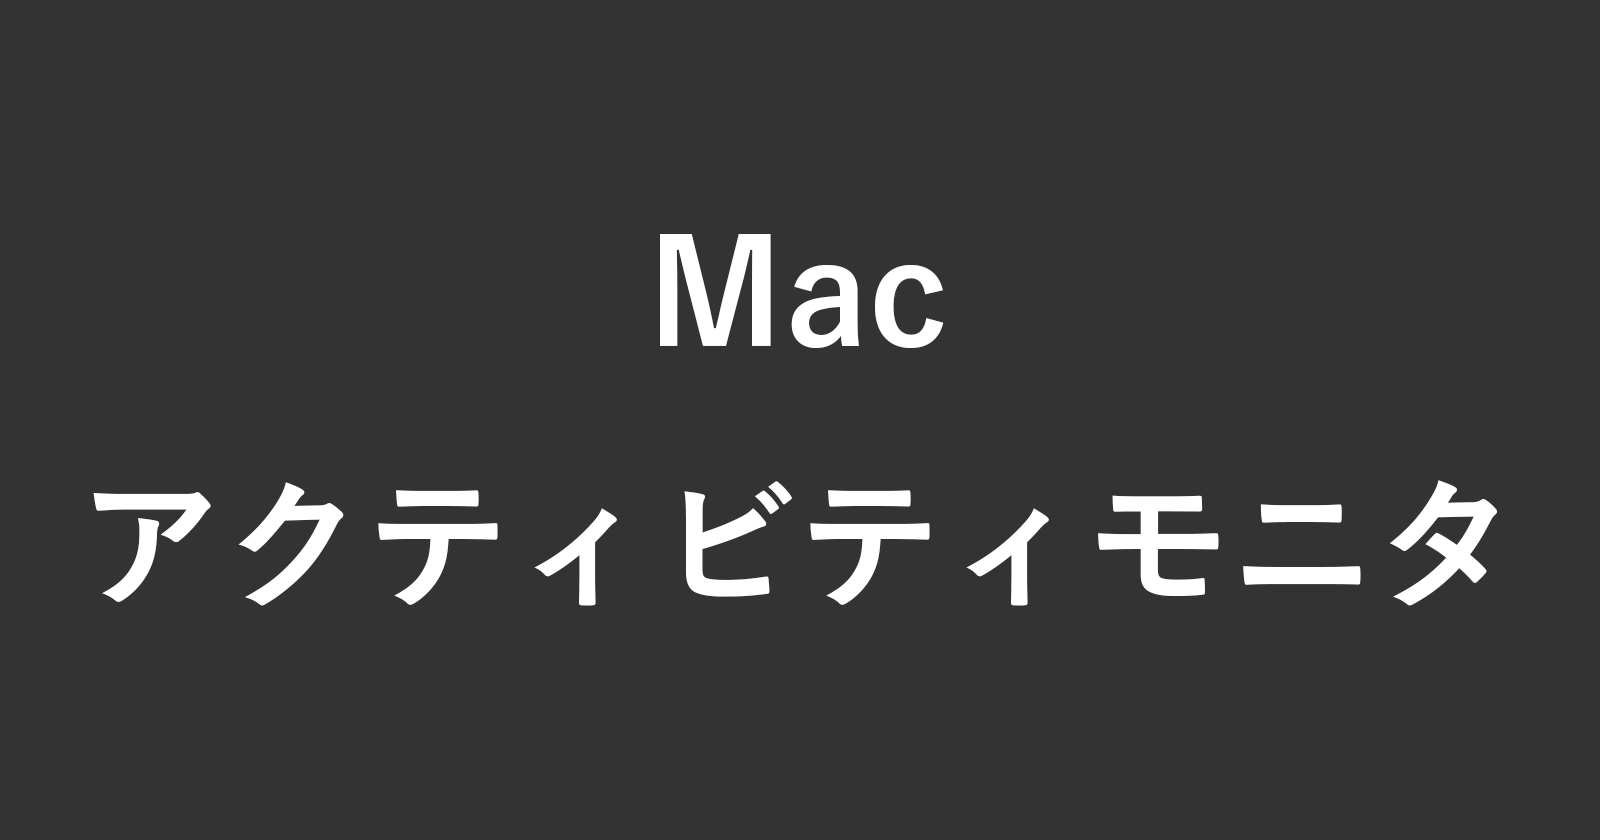 mac activity monitor